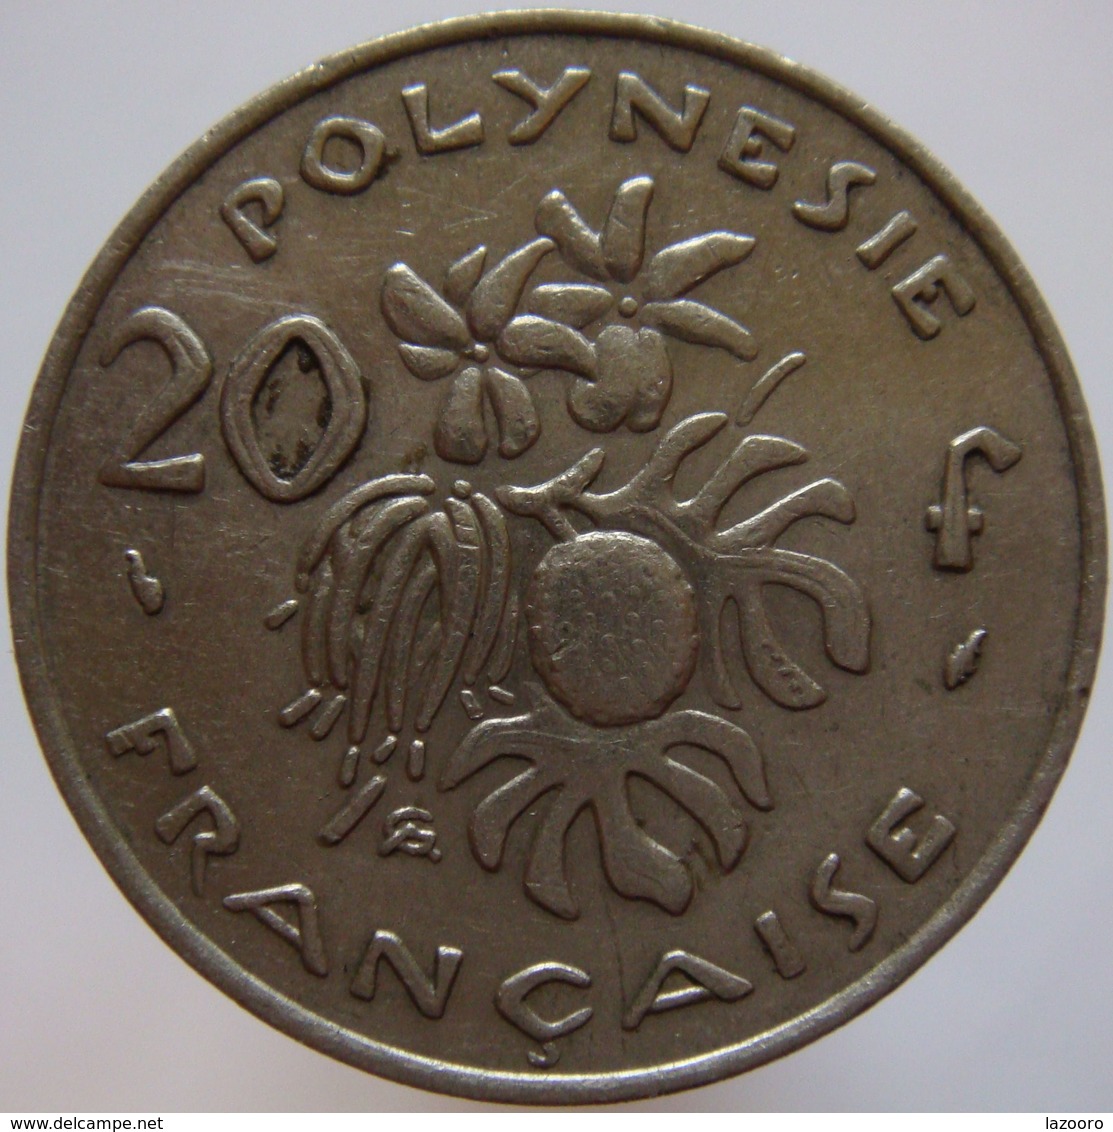 LaZooRo: French Polynesia 20 Francs 1975 VF / XF - Polynésie Française